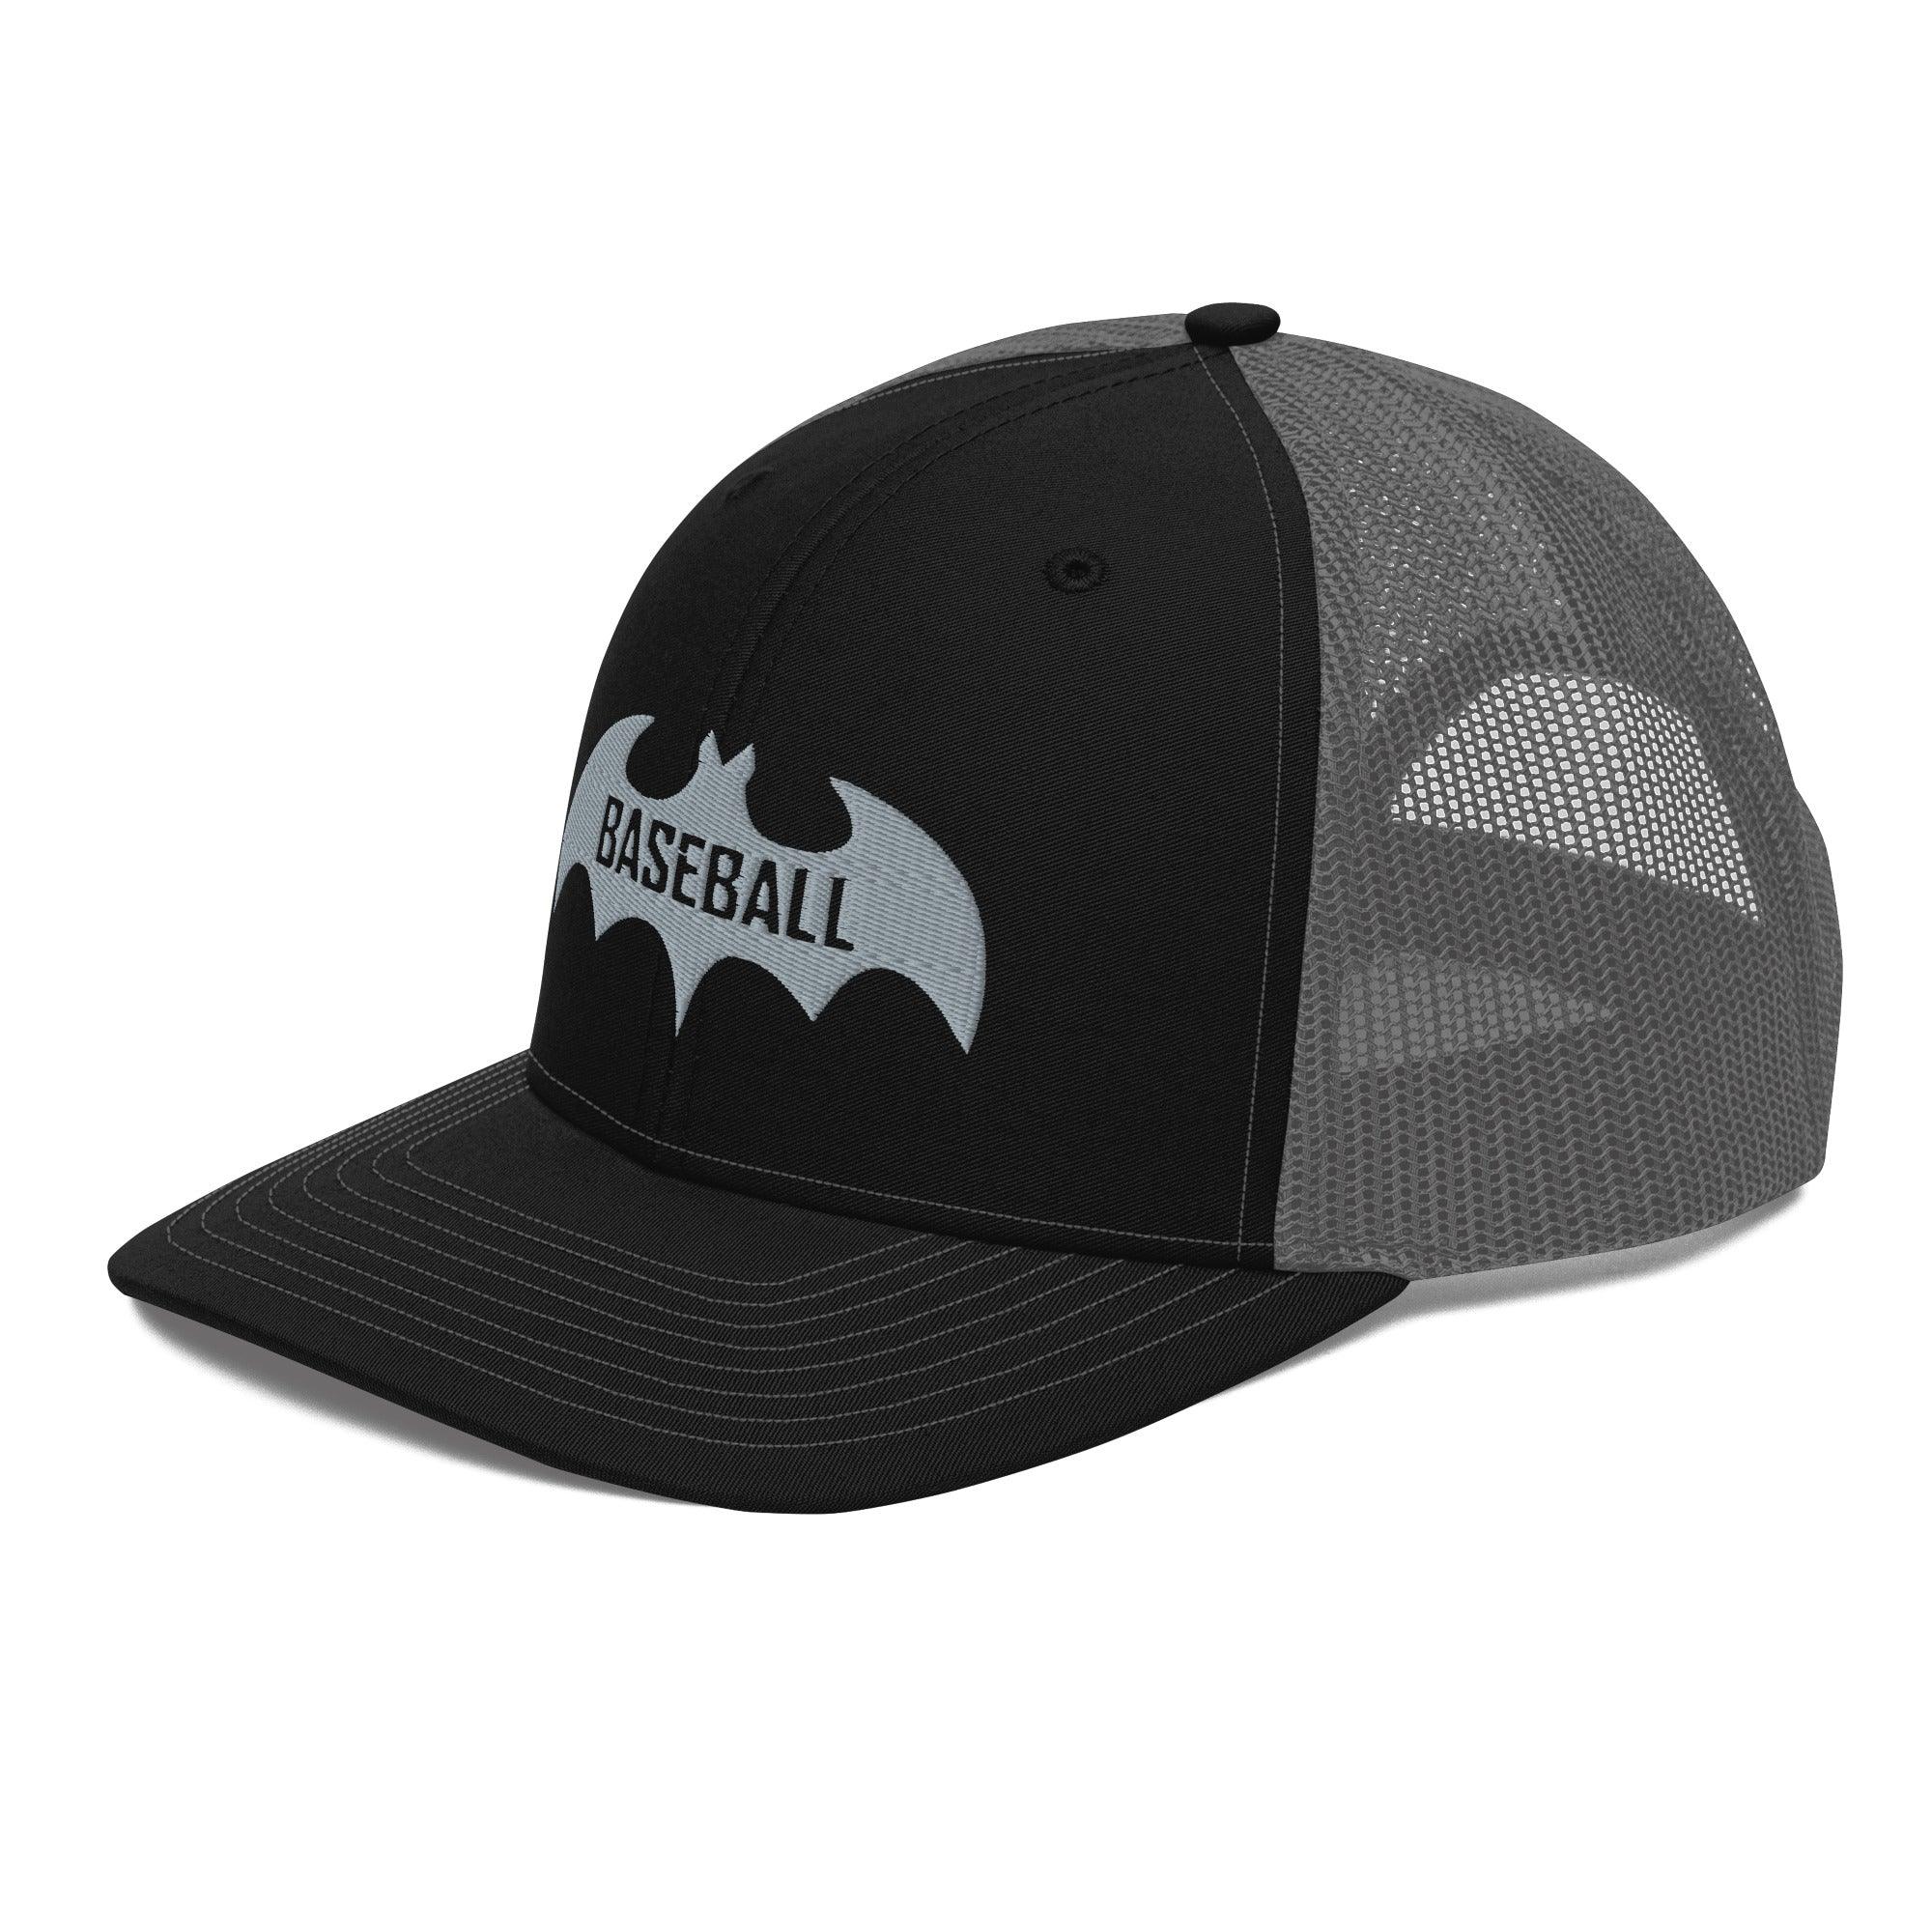 Baseball Bat Trucker Cap